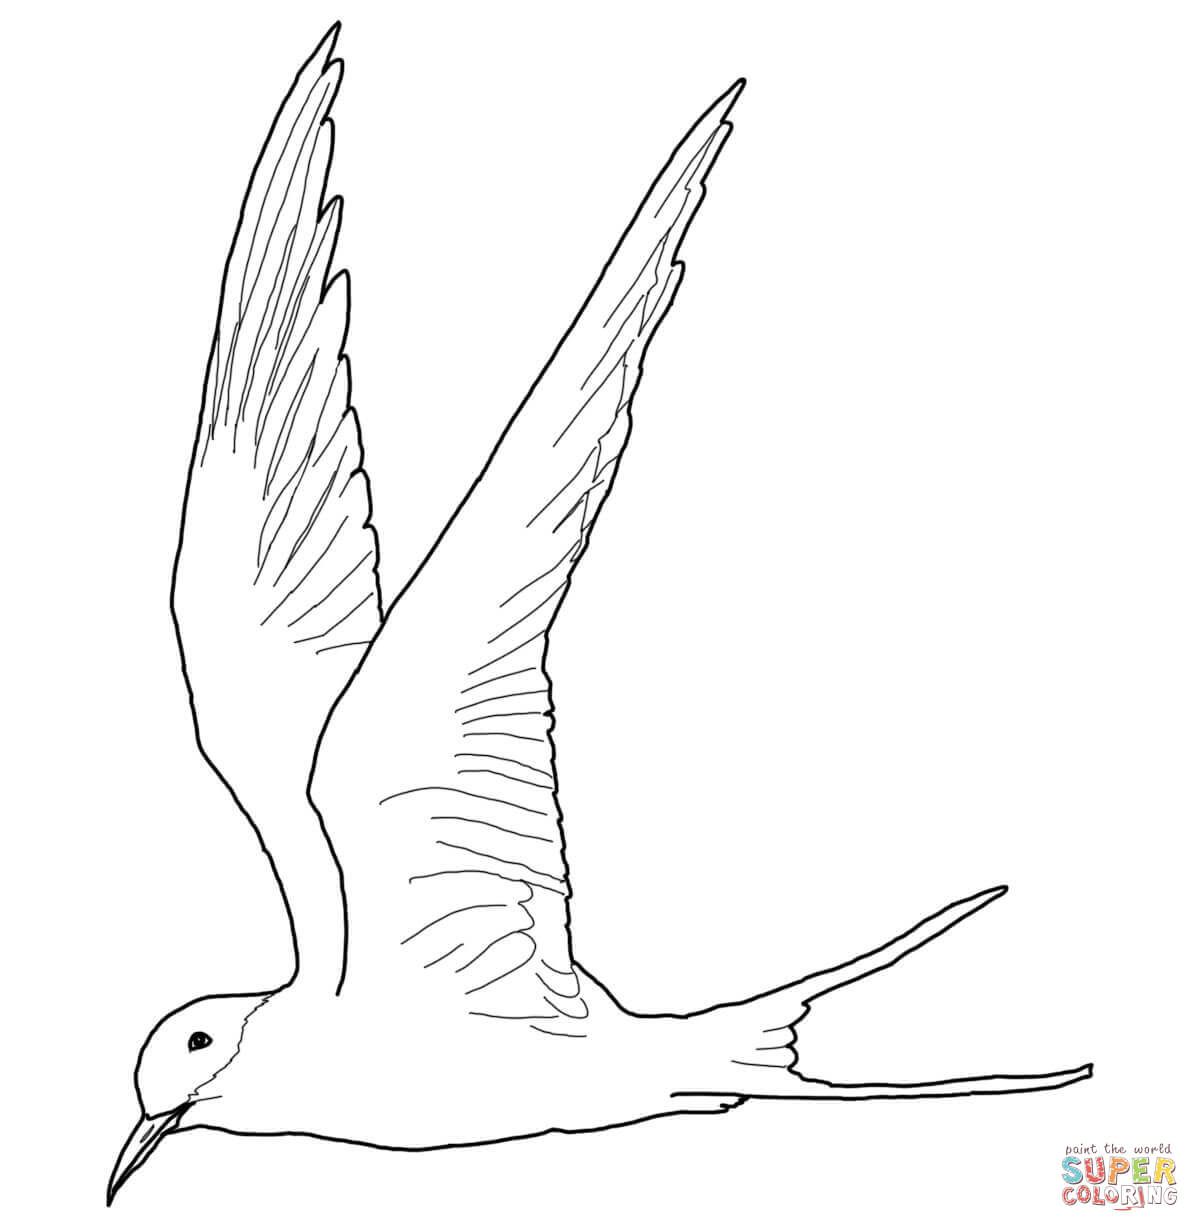 Tern coloring #16, Download drawings